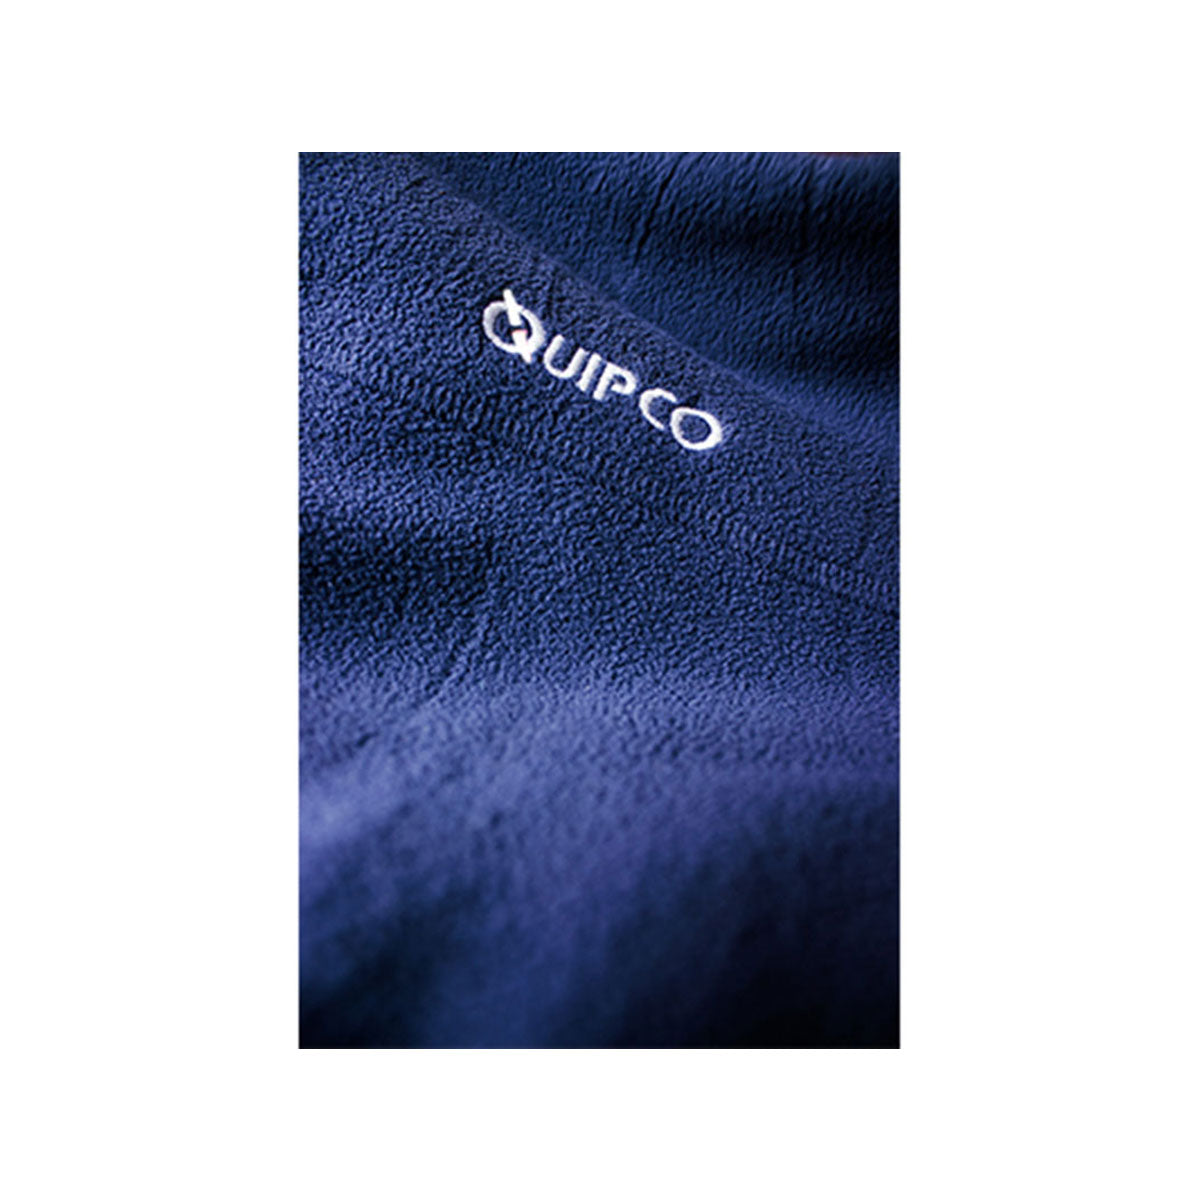 QuipCo Tundra 100 Fleece Warm Jacket (Navy Blue) - Outdoor Travel Gear 6